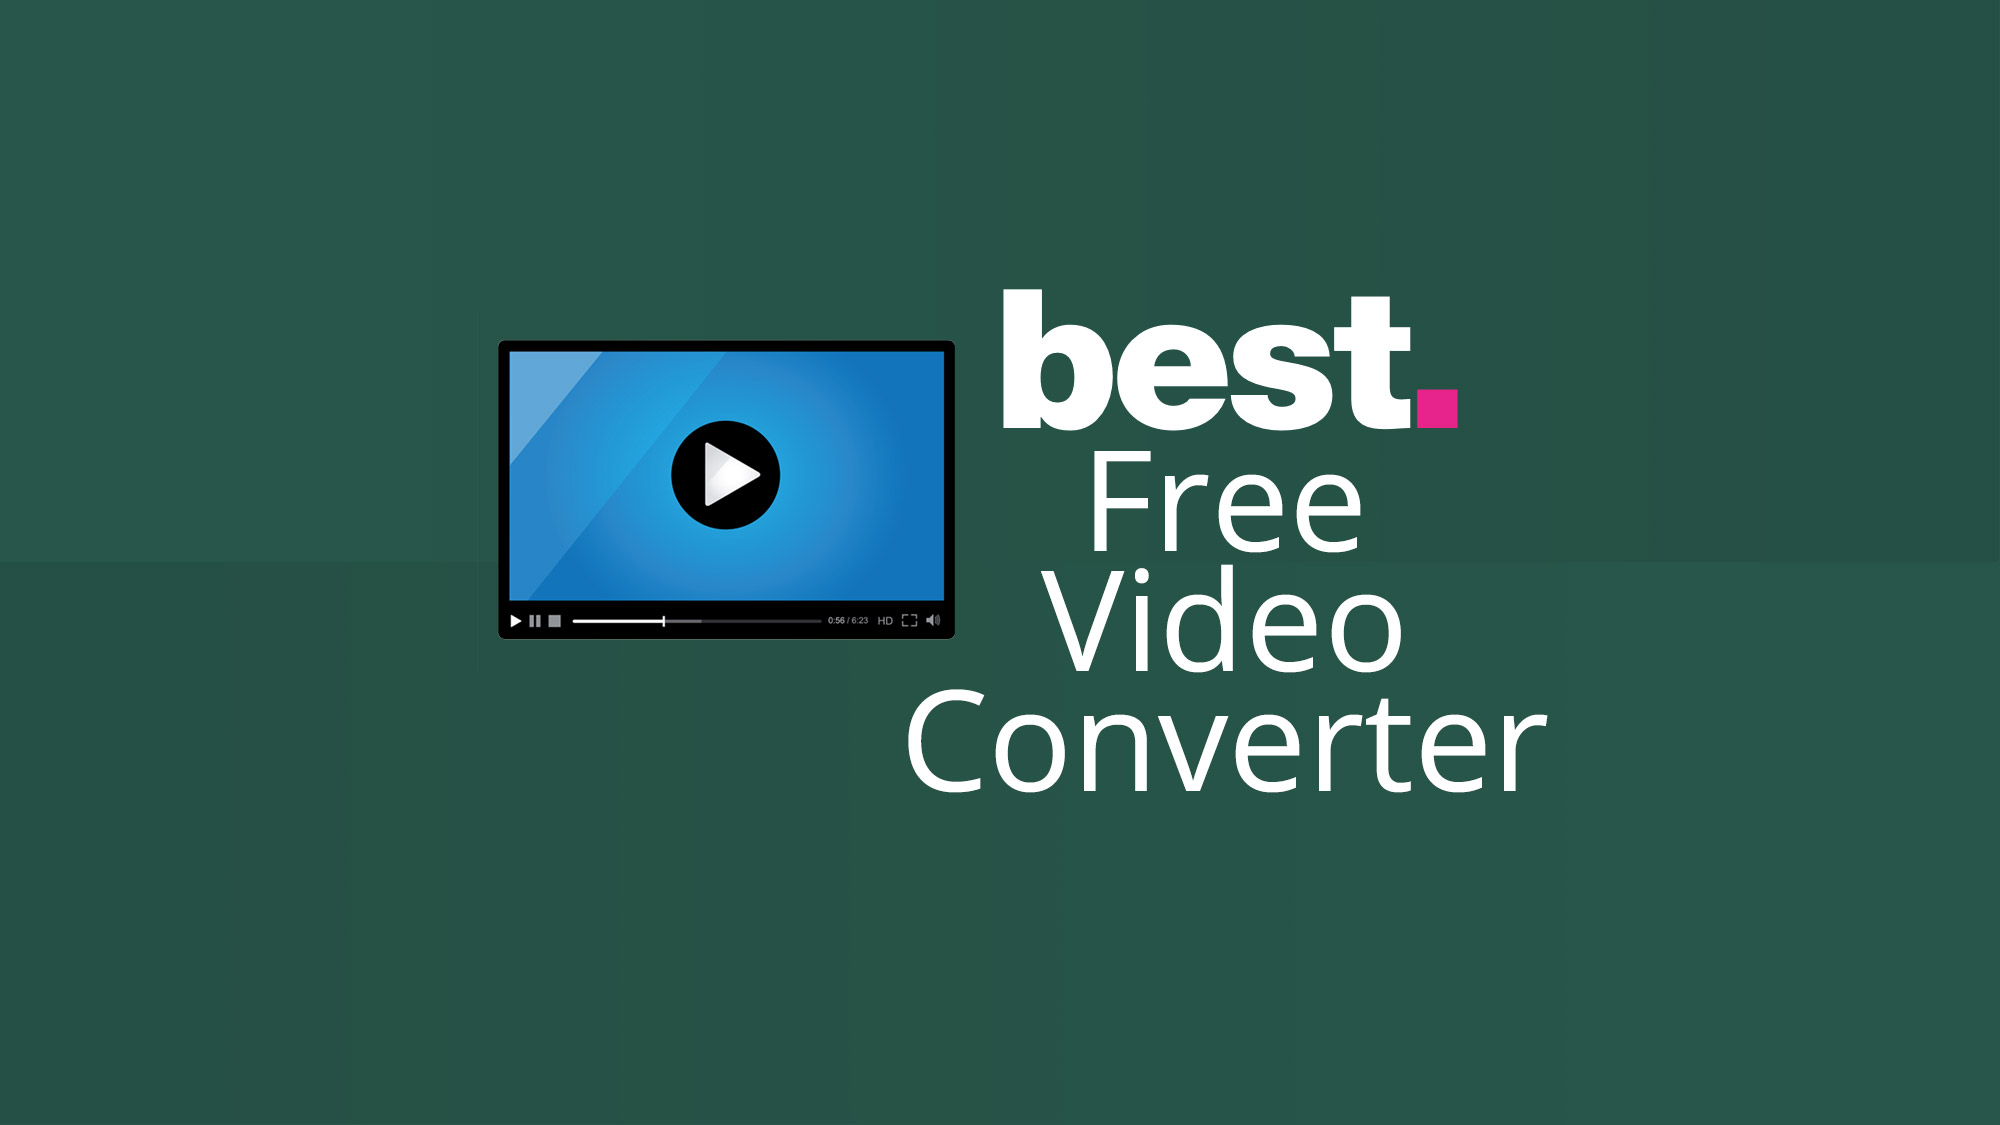 mac video editor best free 2019